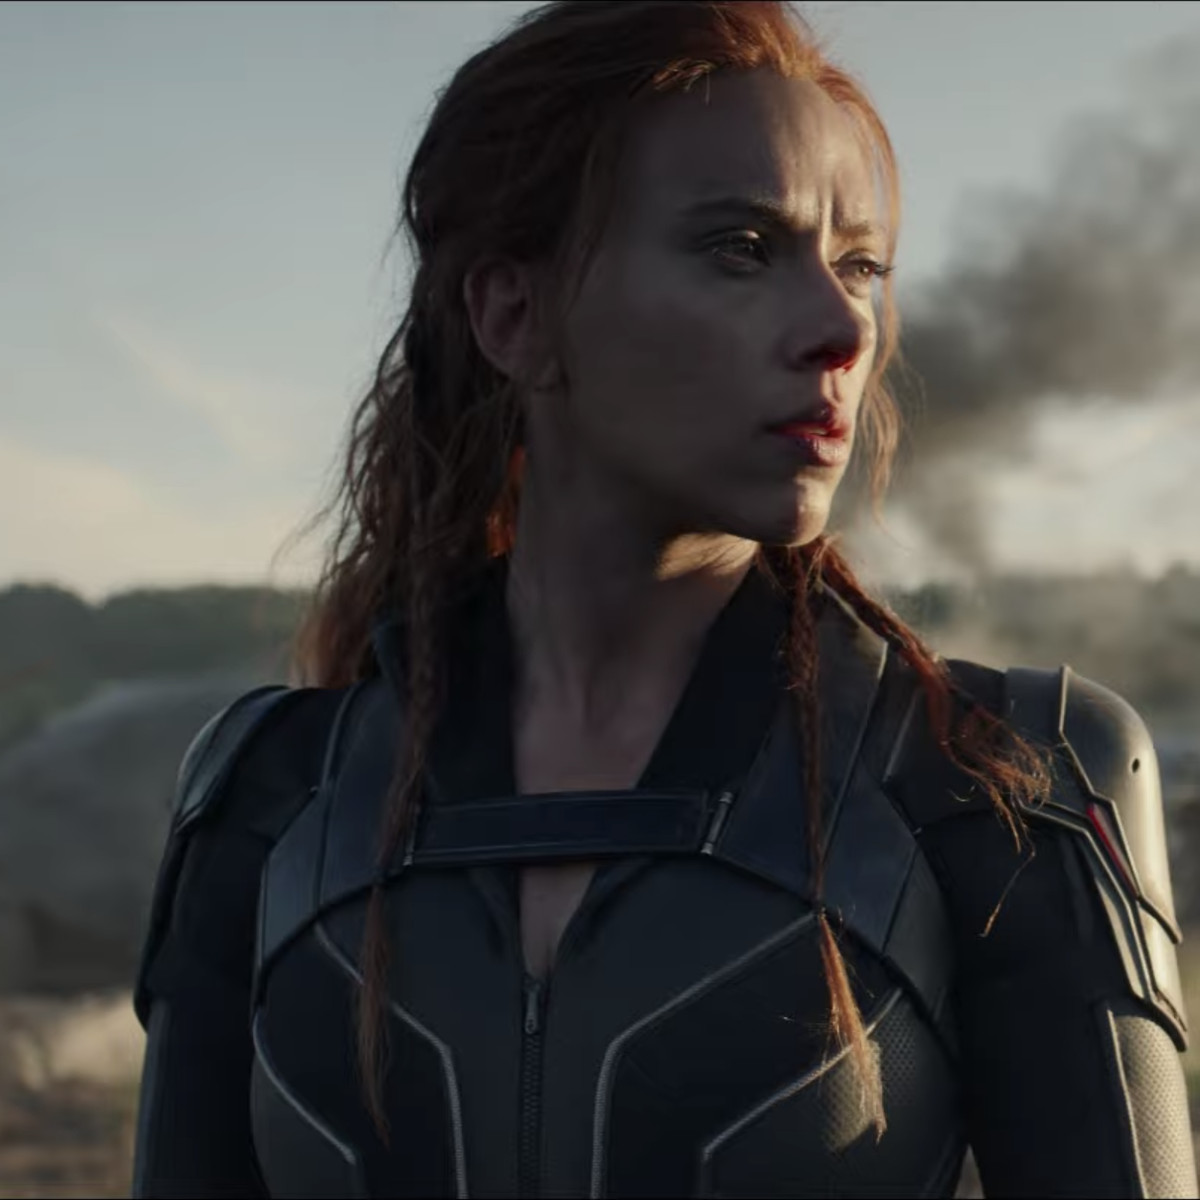 Scarlett Johansson as Natasha Romanoff/Black Widow looks cool posing in front of some smoke in a field, in a teaser trailer for Marvel Studios’ Black Widow.